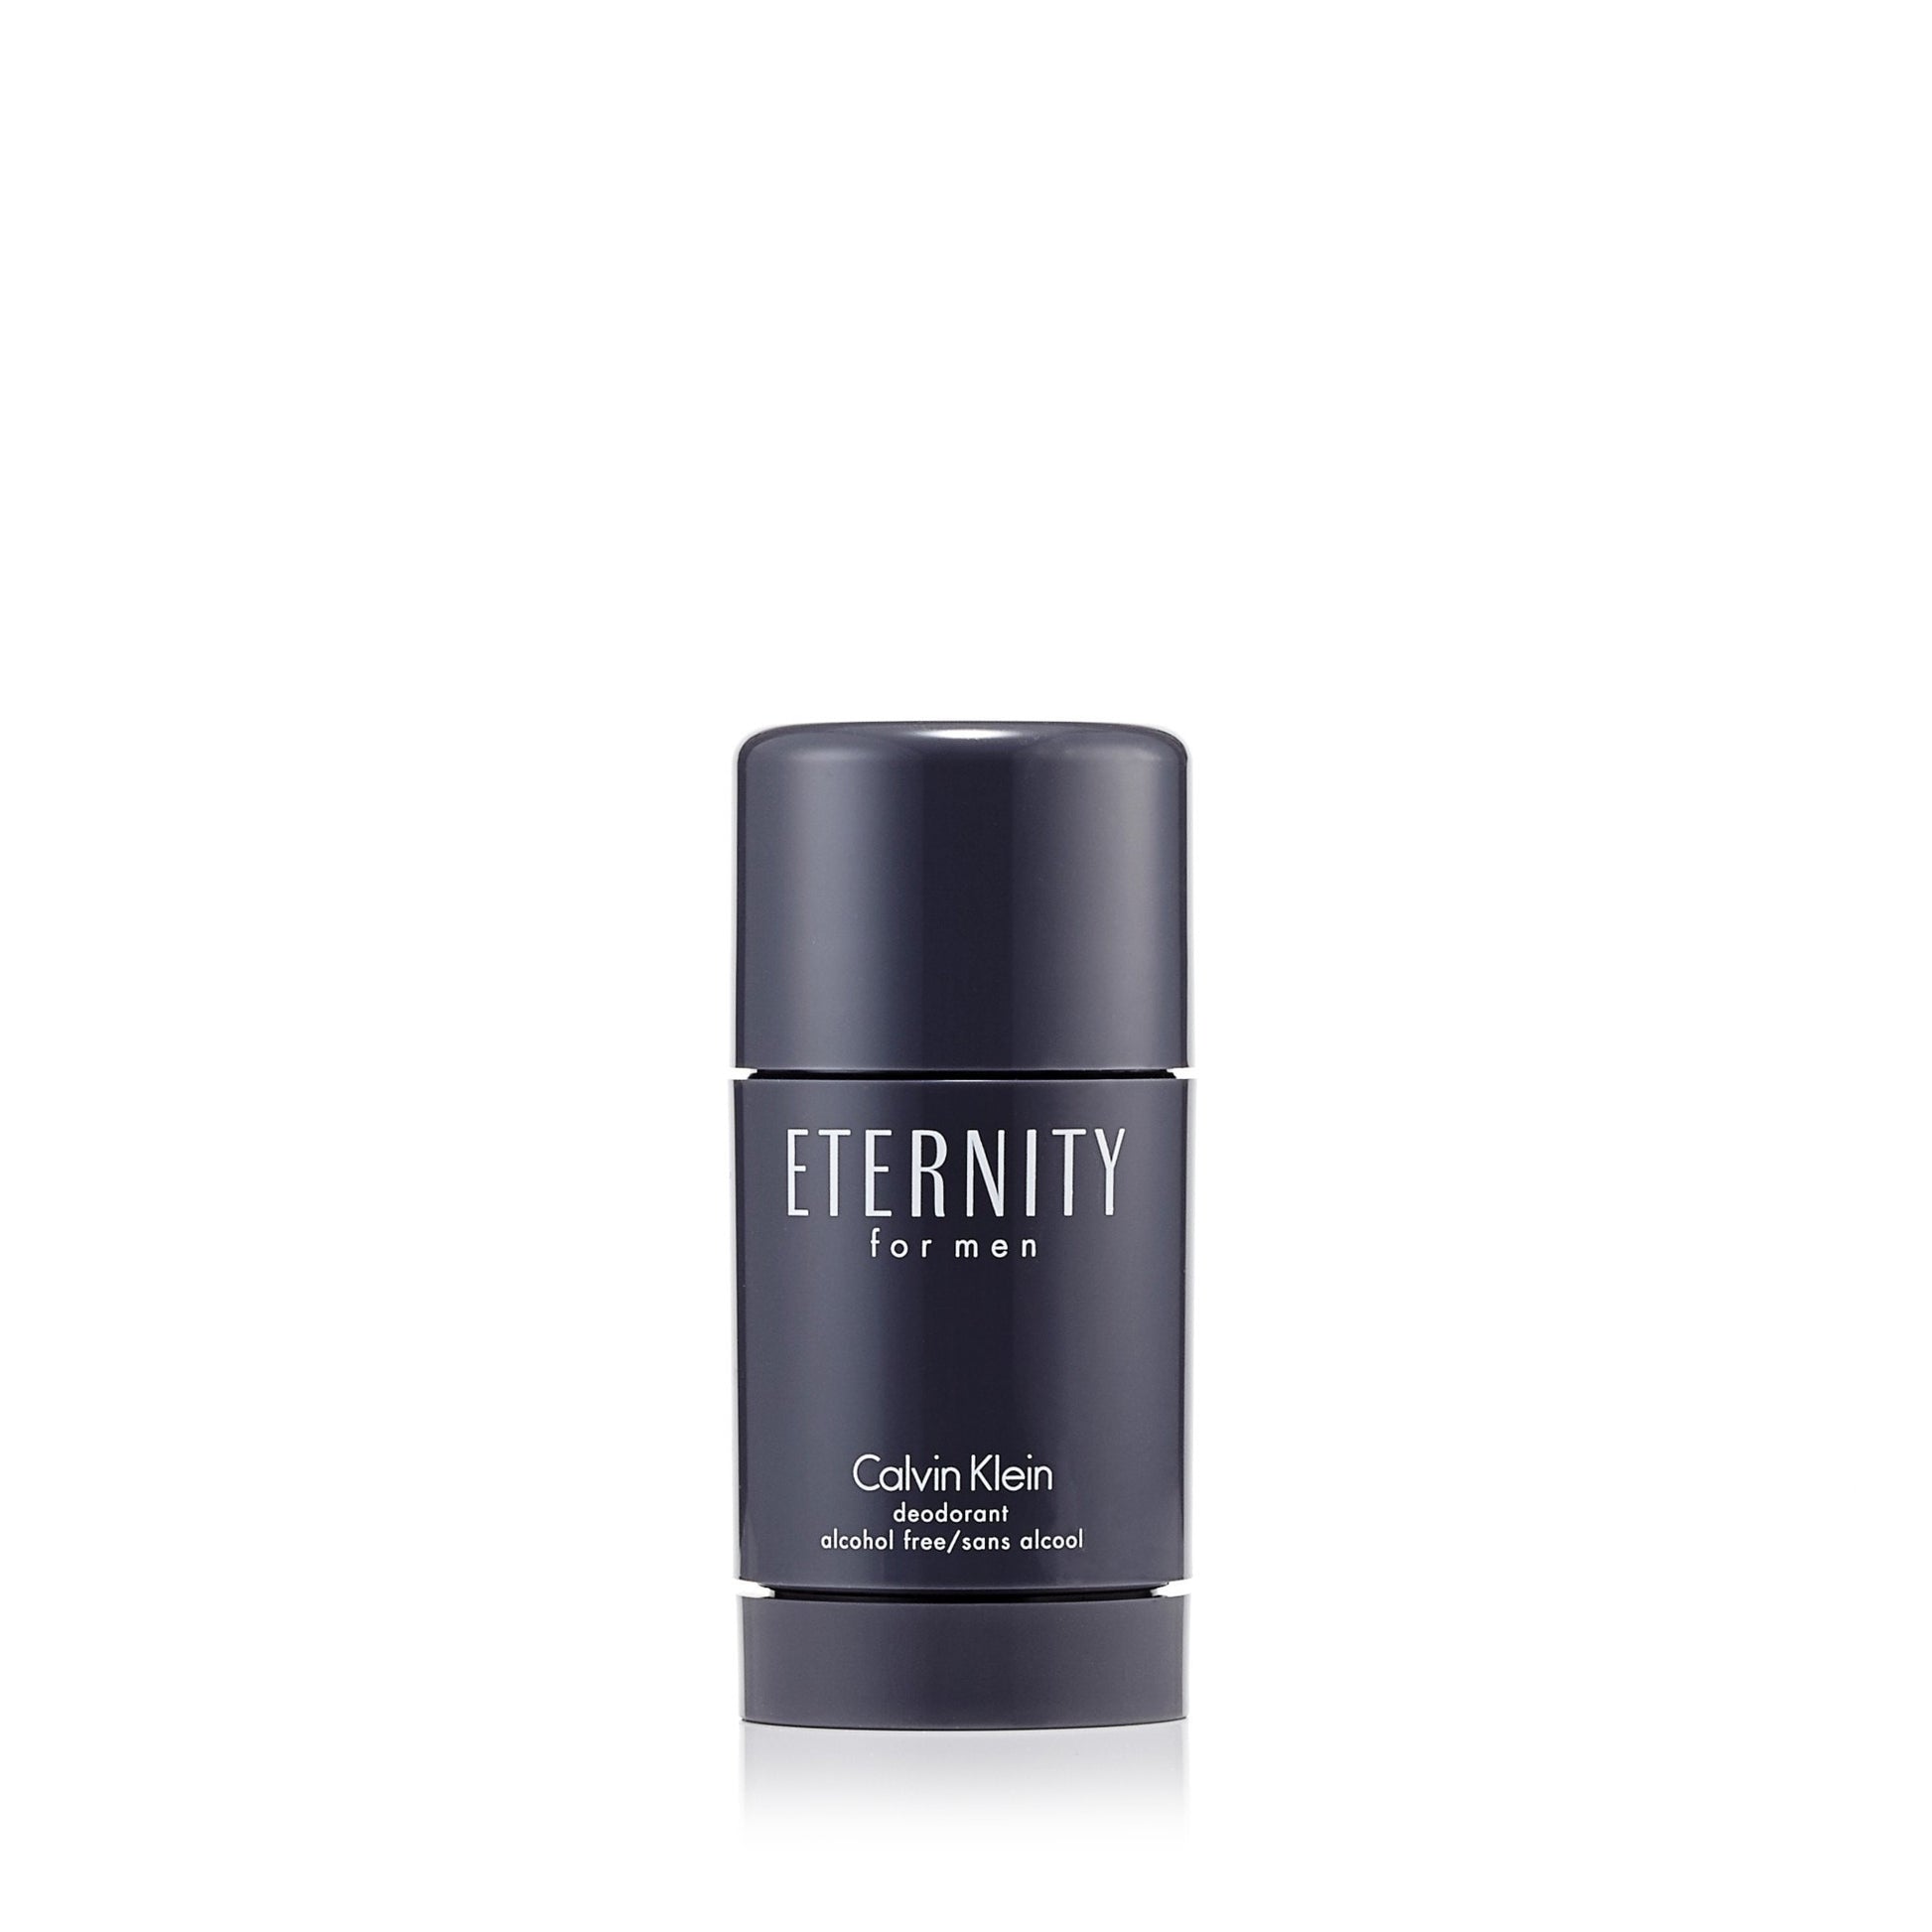 Eternity Deodorant for Men by Calvin Klein 2.6 oz. Click to open in modal